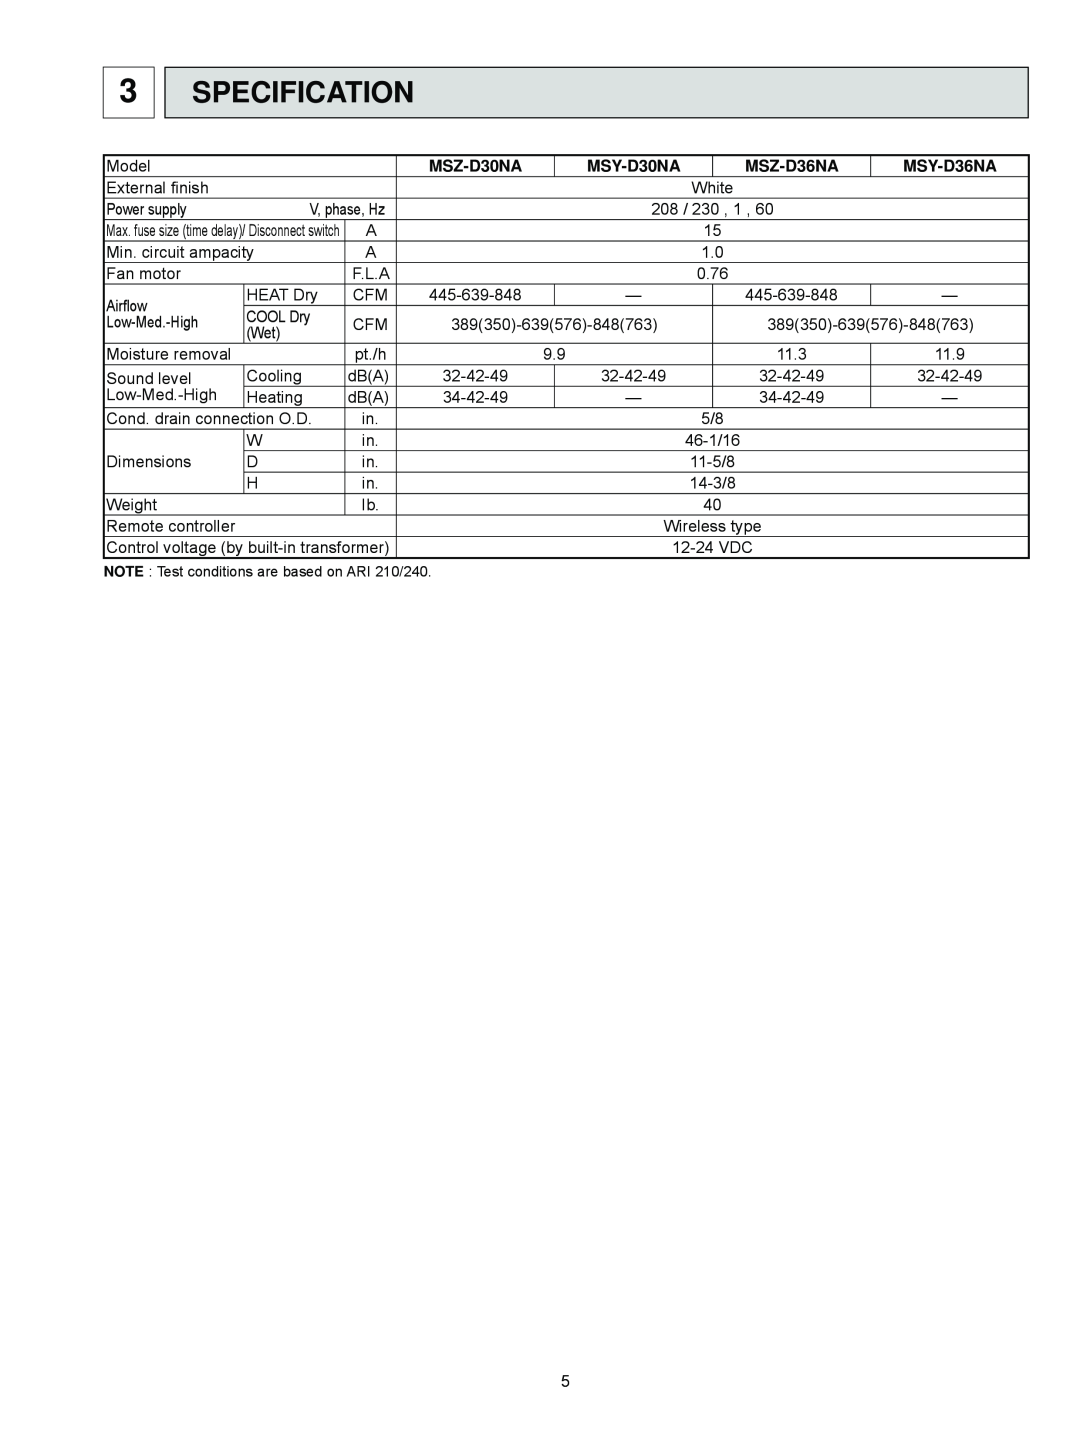 Vermont Casting MSZ-D30NA service manual Specification, MSY-D30NA, MSZ-D36NA, MSY-D36NA 